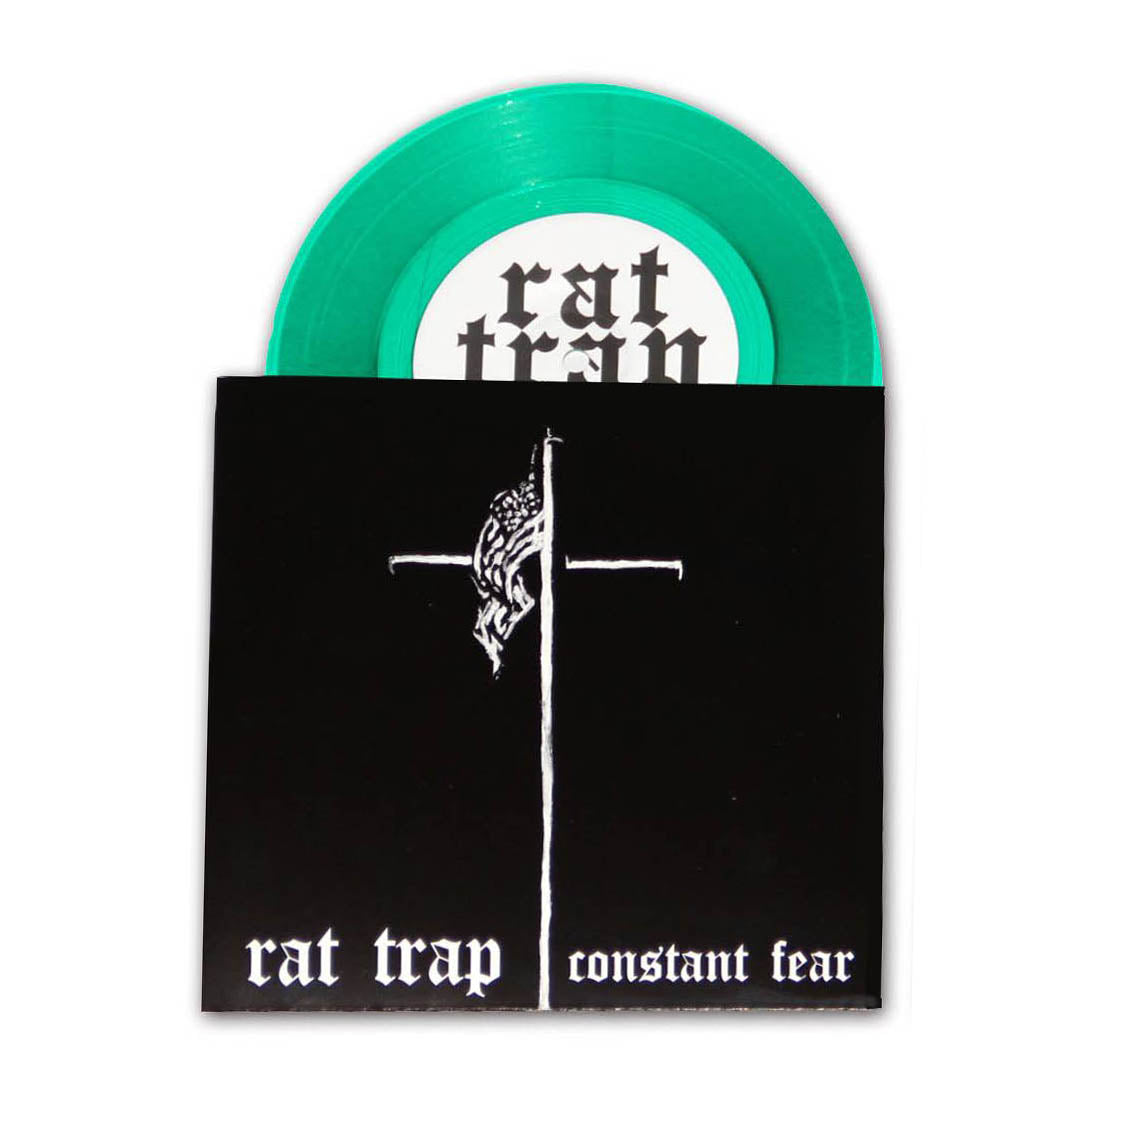 Rat Trap- Constant Fear- Split 7” ~INTEGRITY / RARE GREEN WAX LTD TO 100!